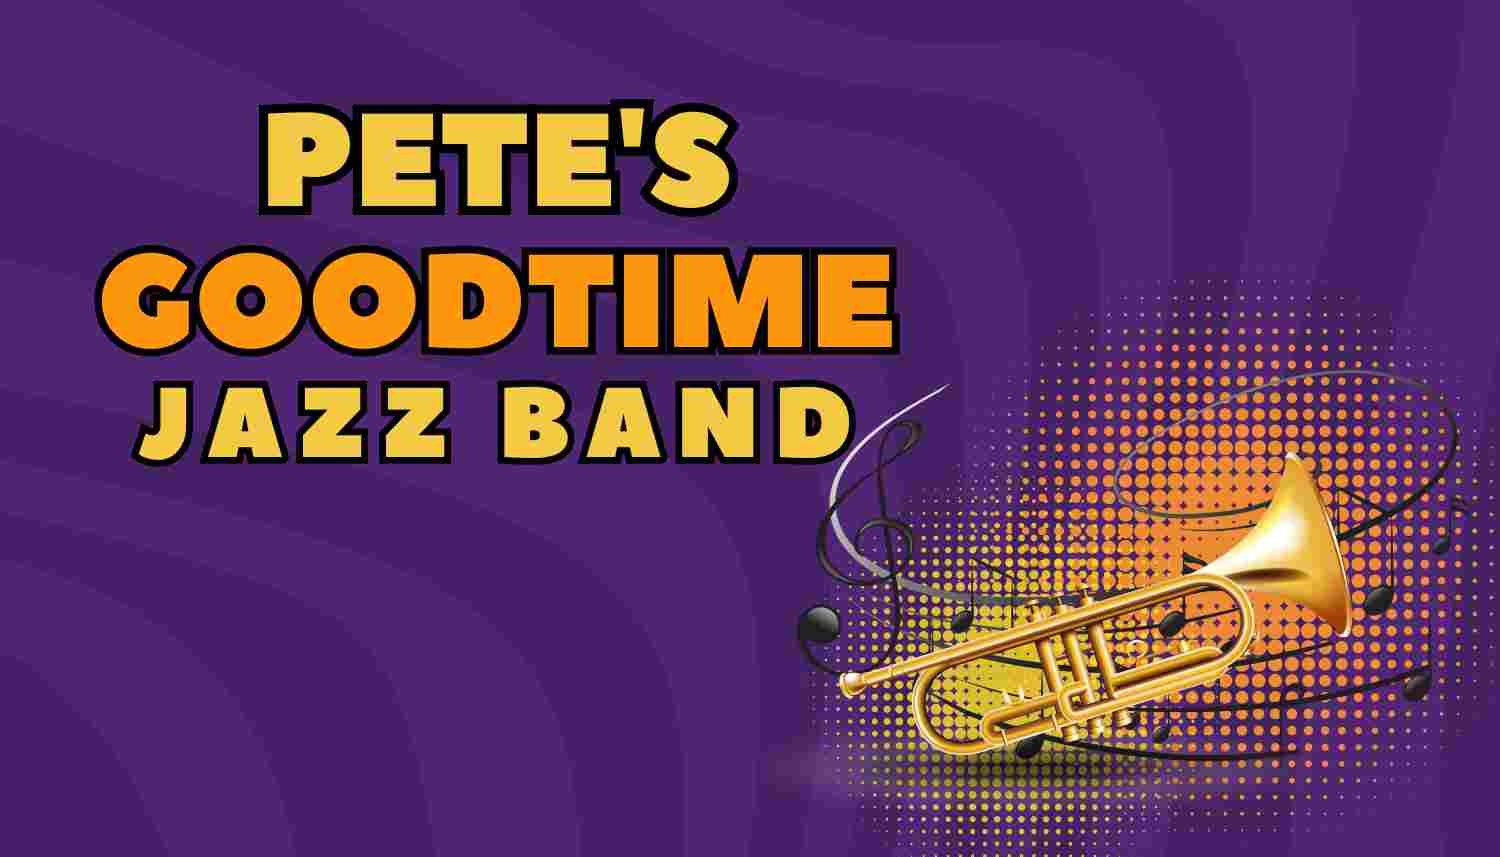 Pete's Goodtime Jazz Band